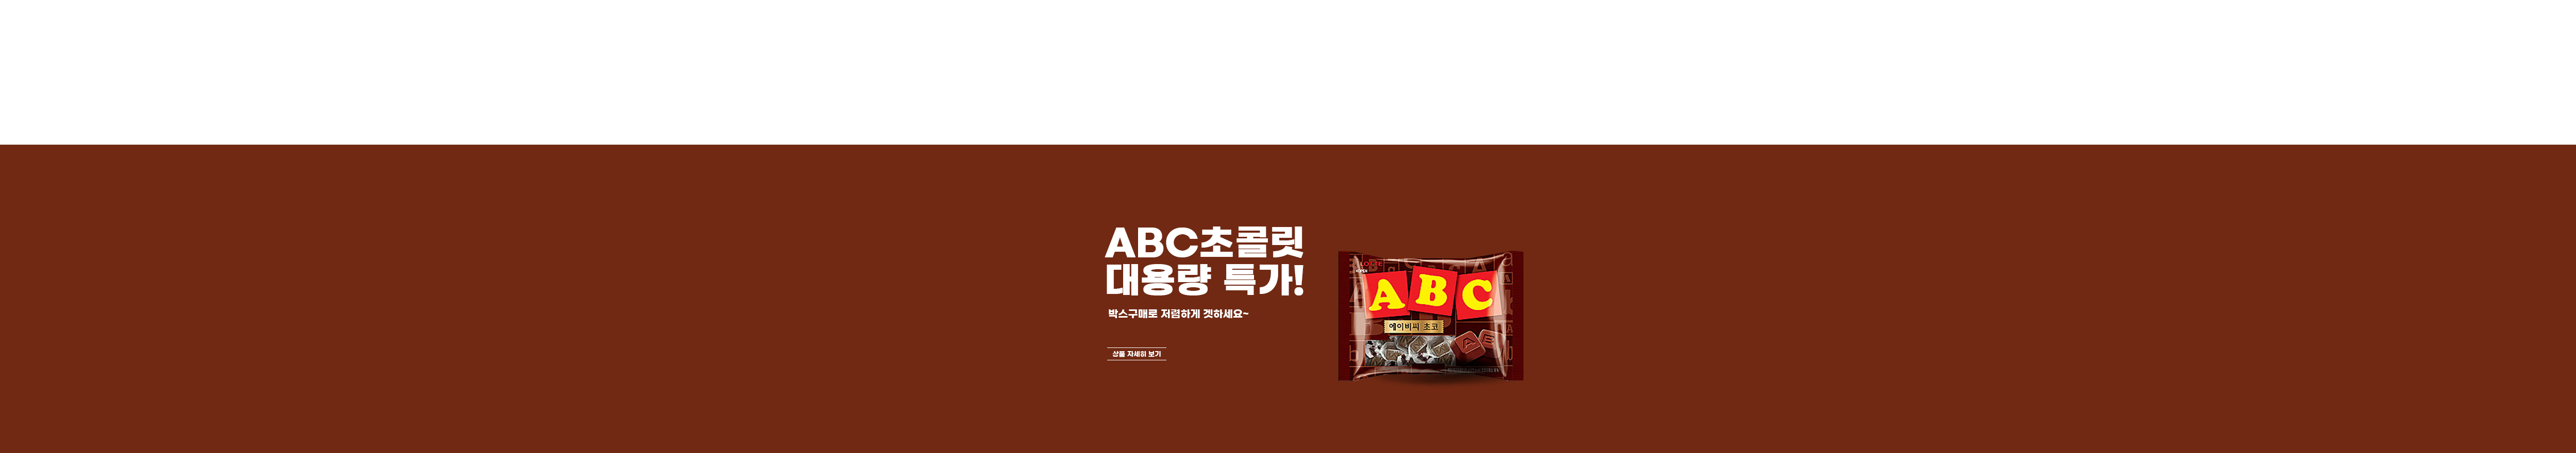 http://jujeonburibox.com/product/abc초코-200g-x-8봉/187/category/106/display/1/